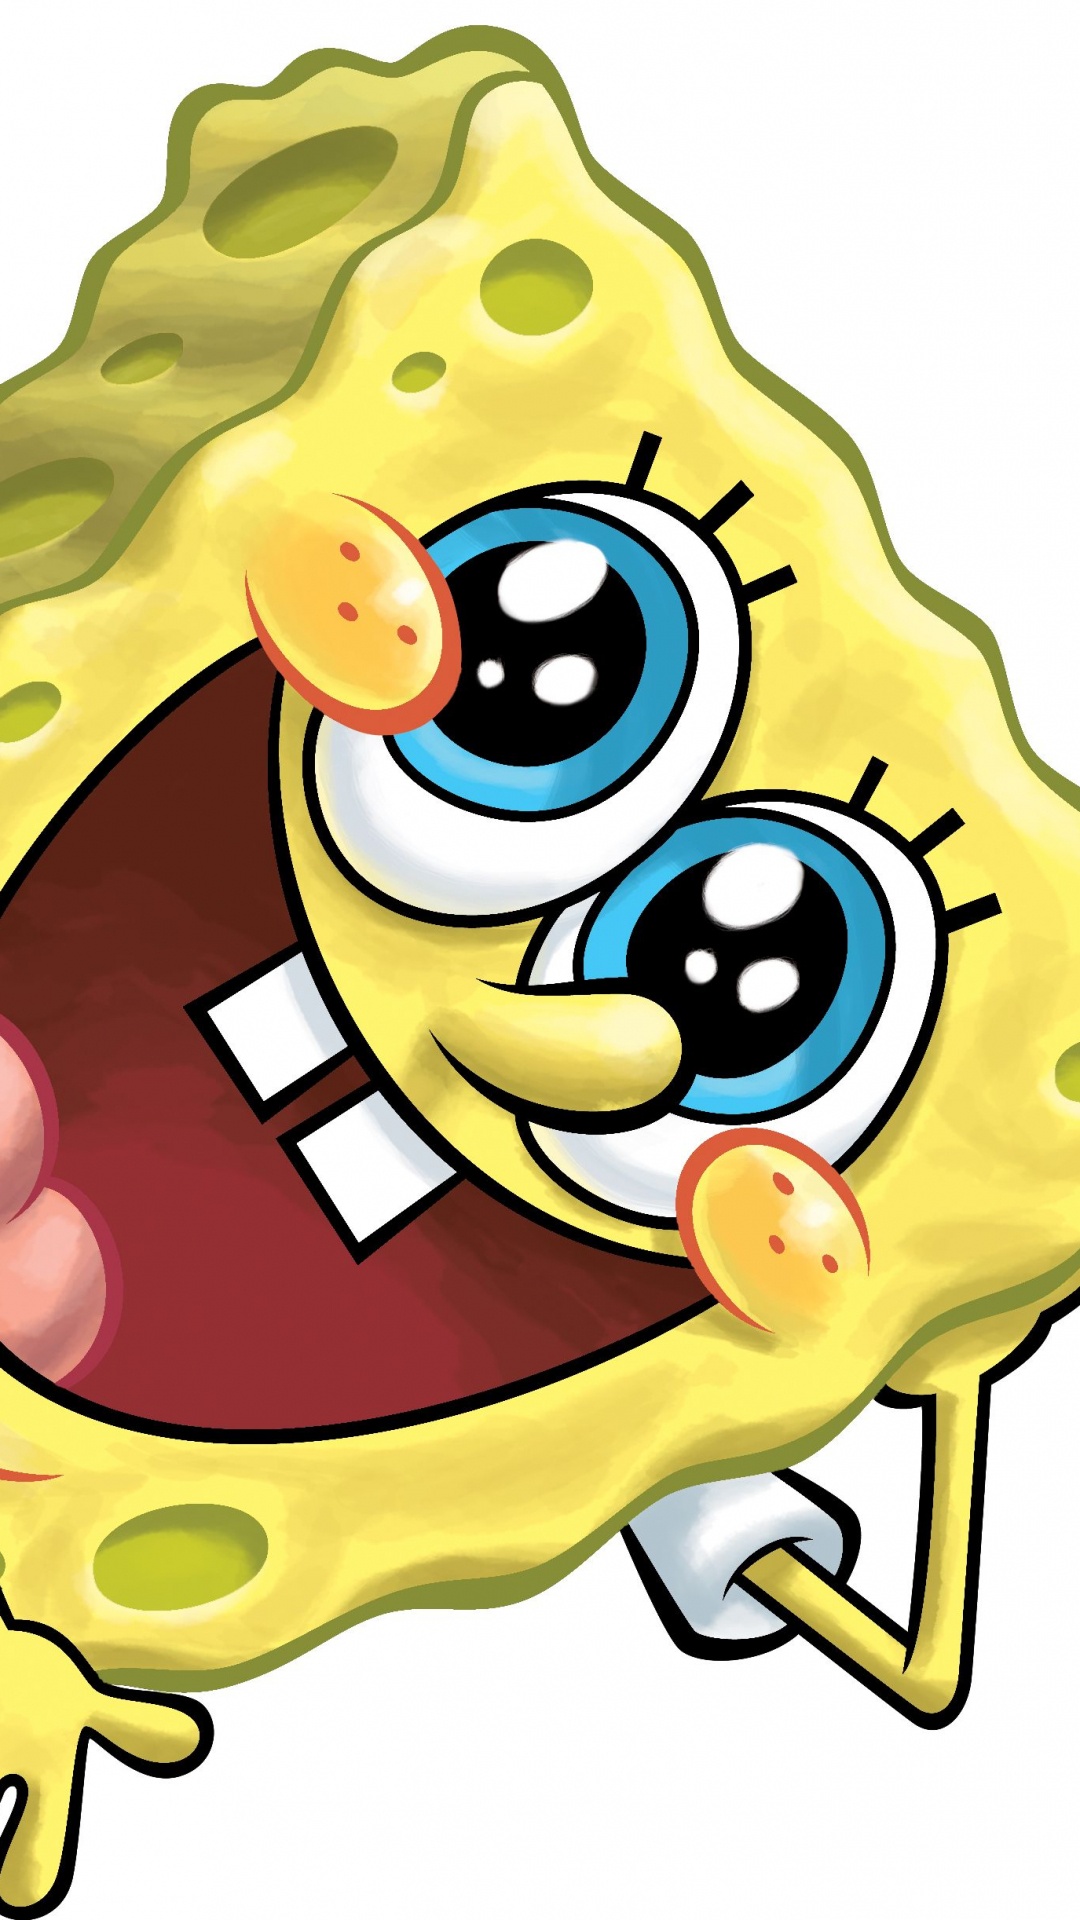 Spongebob Squarepants Holding a Key. Wallpaper in 1080x1920 Resolution